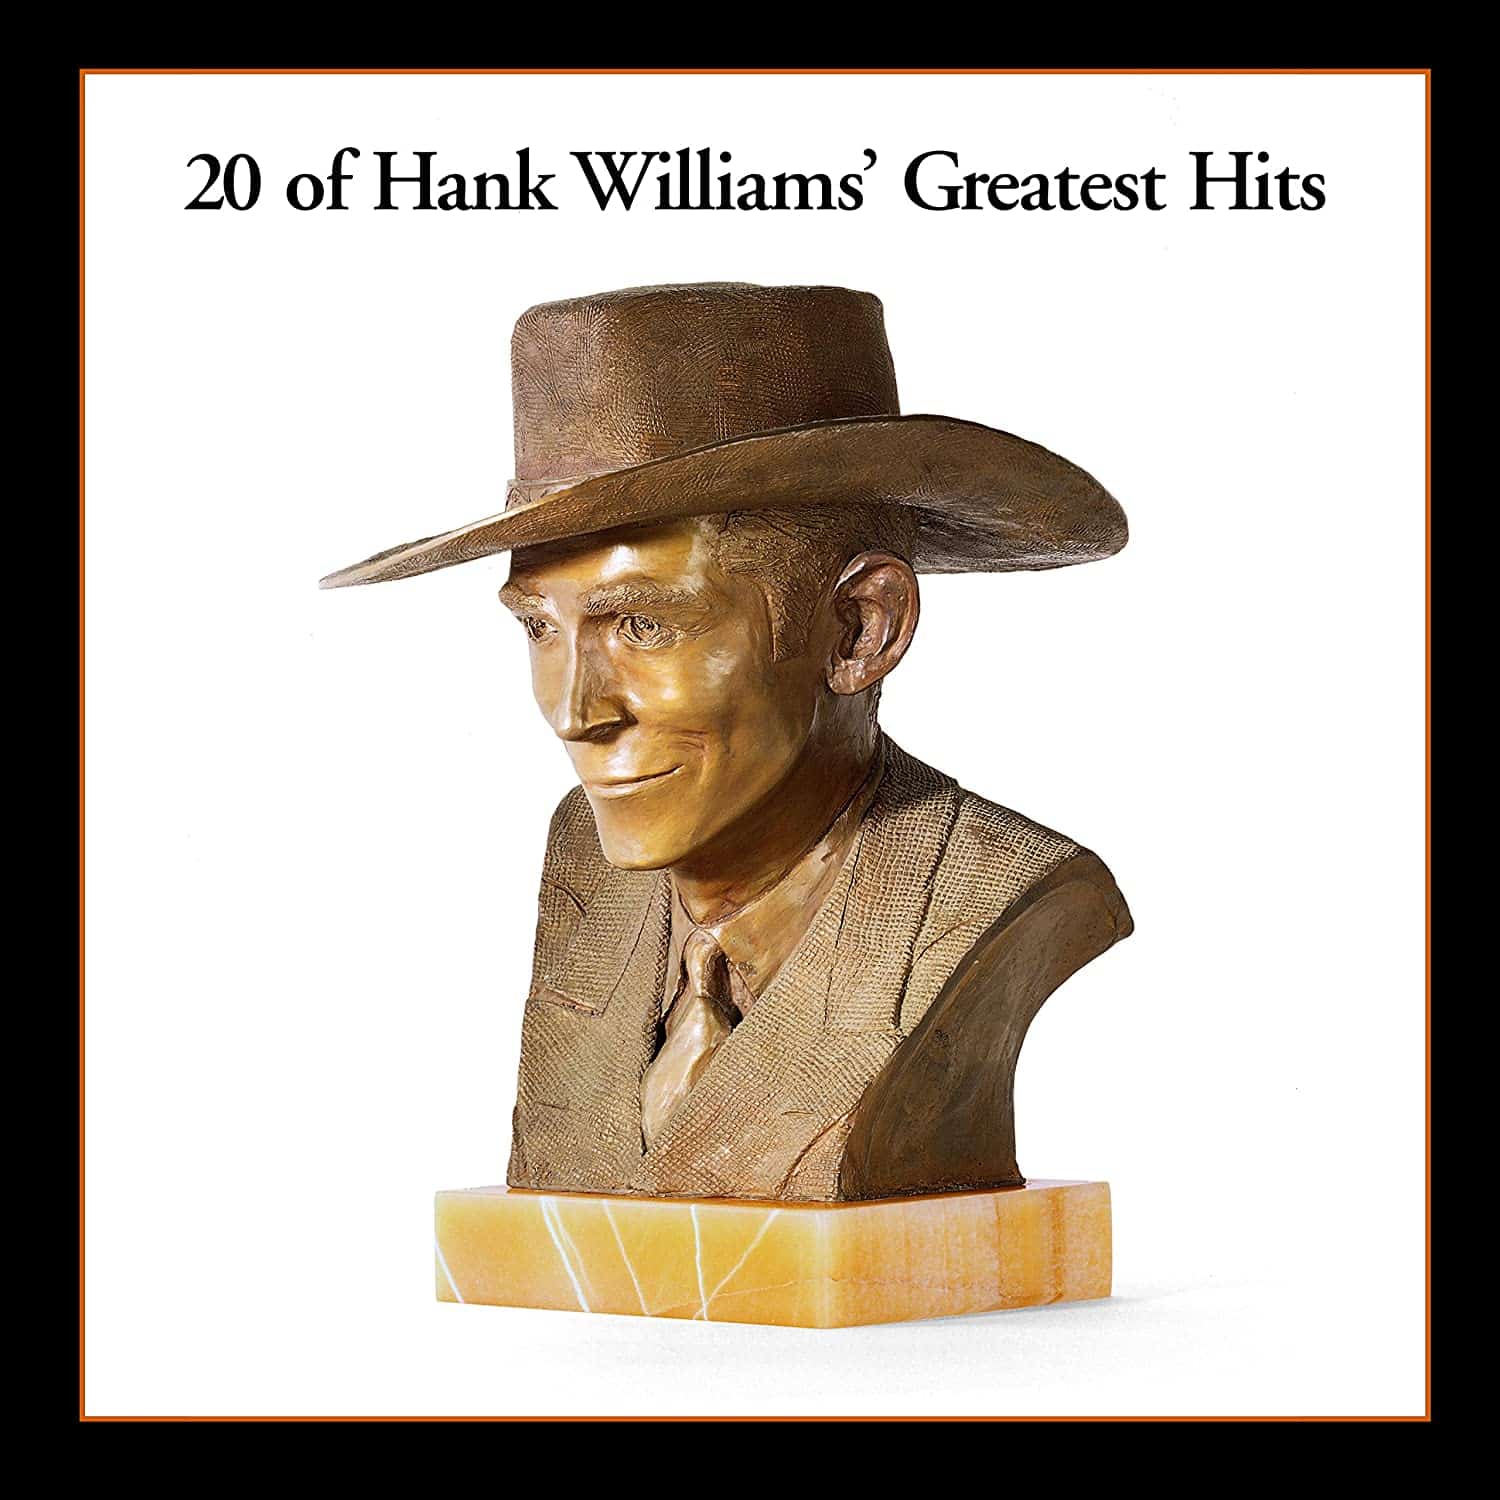 hank-williams-20-greatest-hits-vinyl-record-album-front